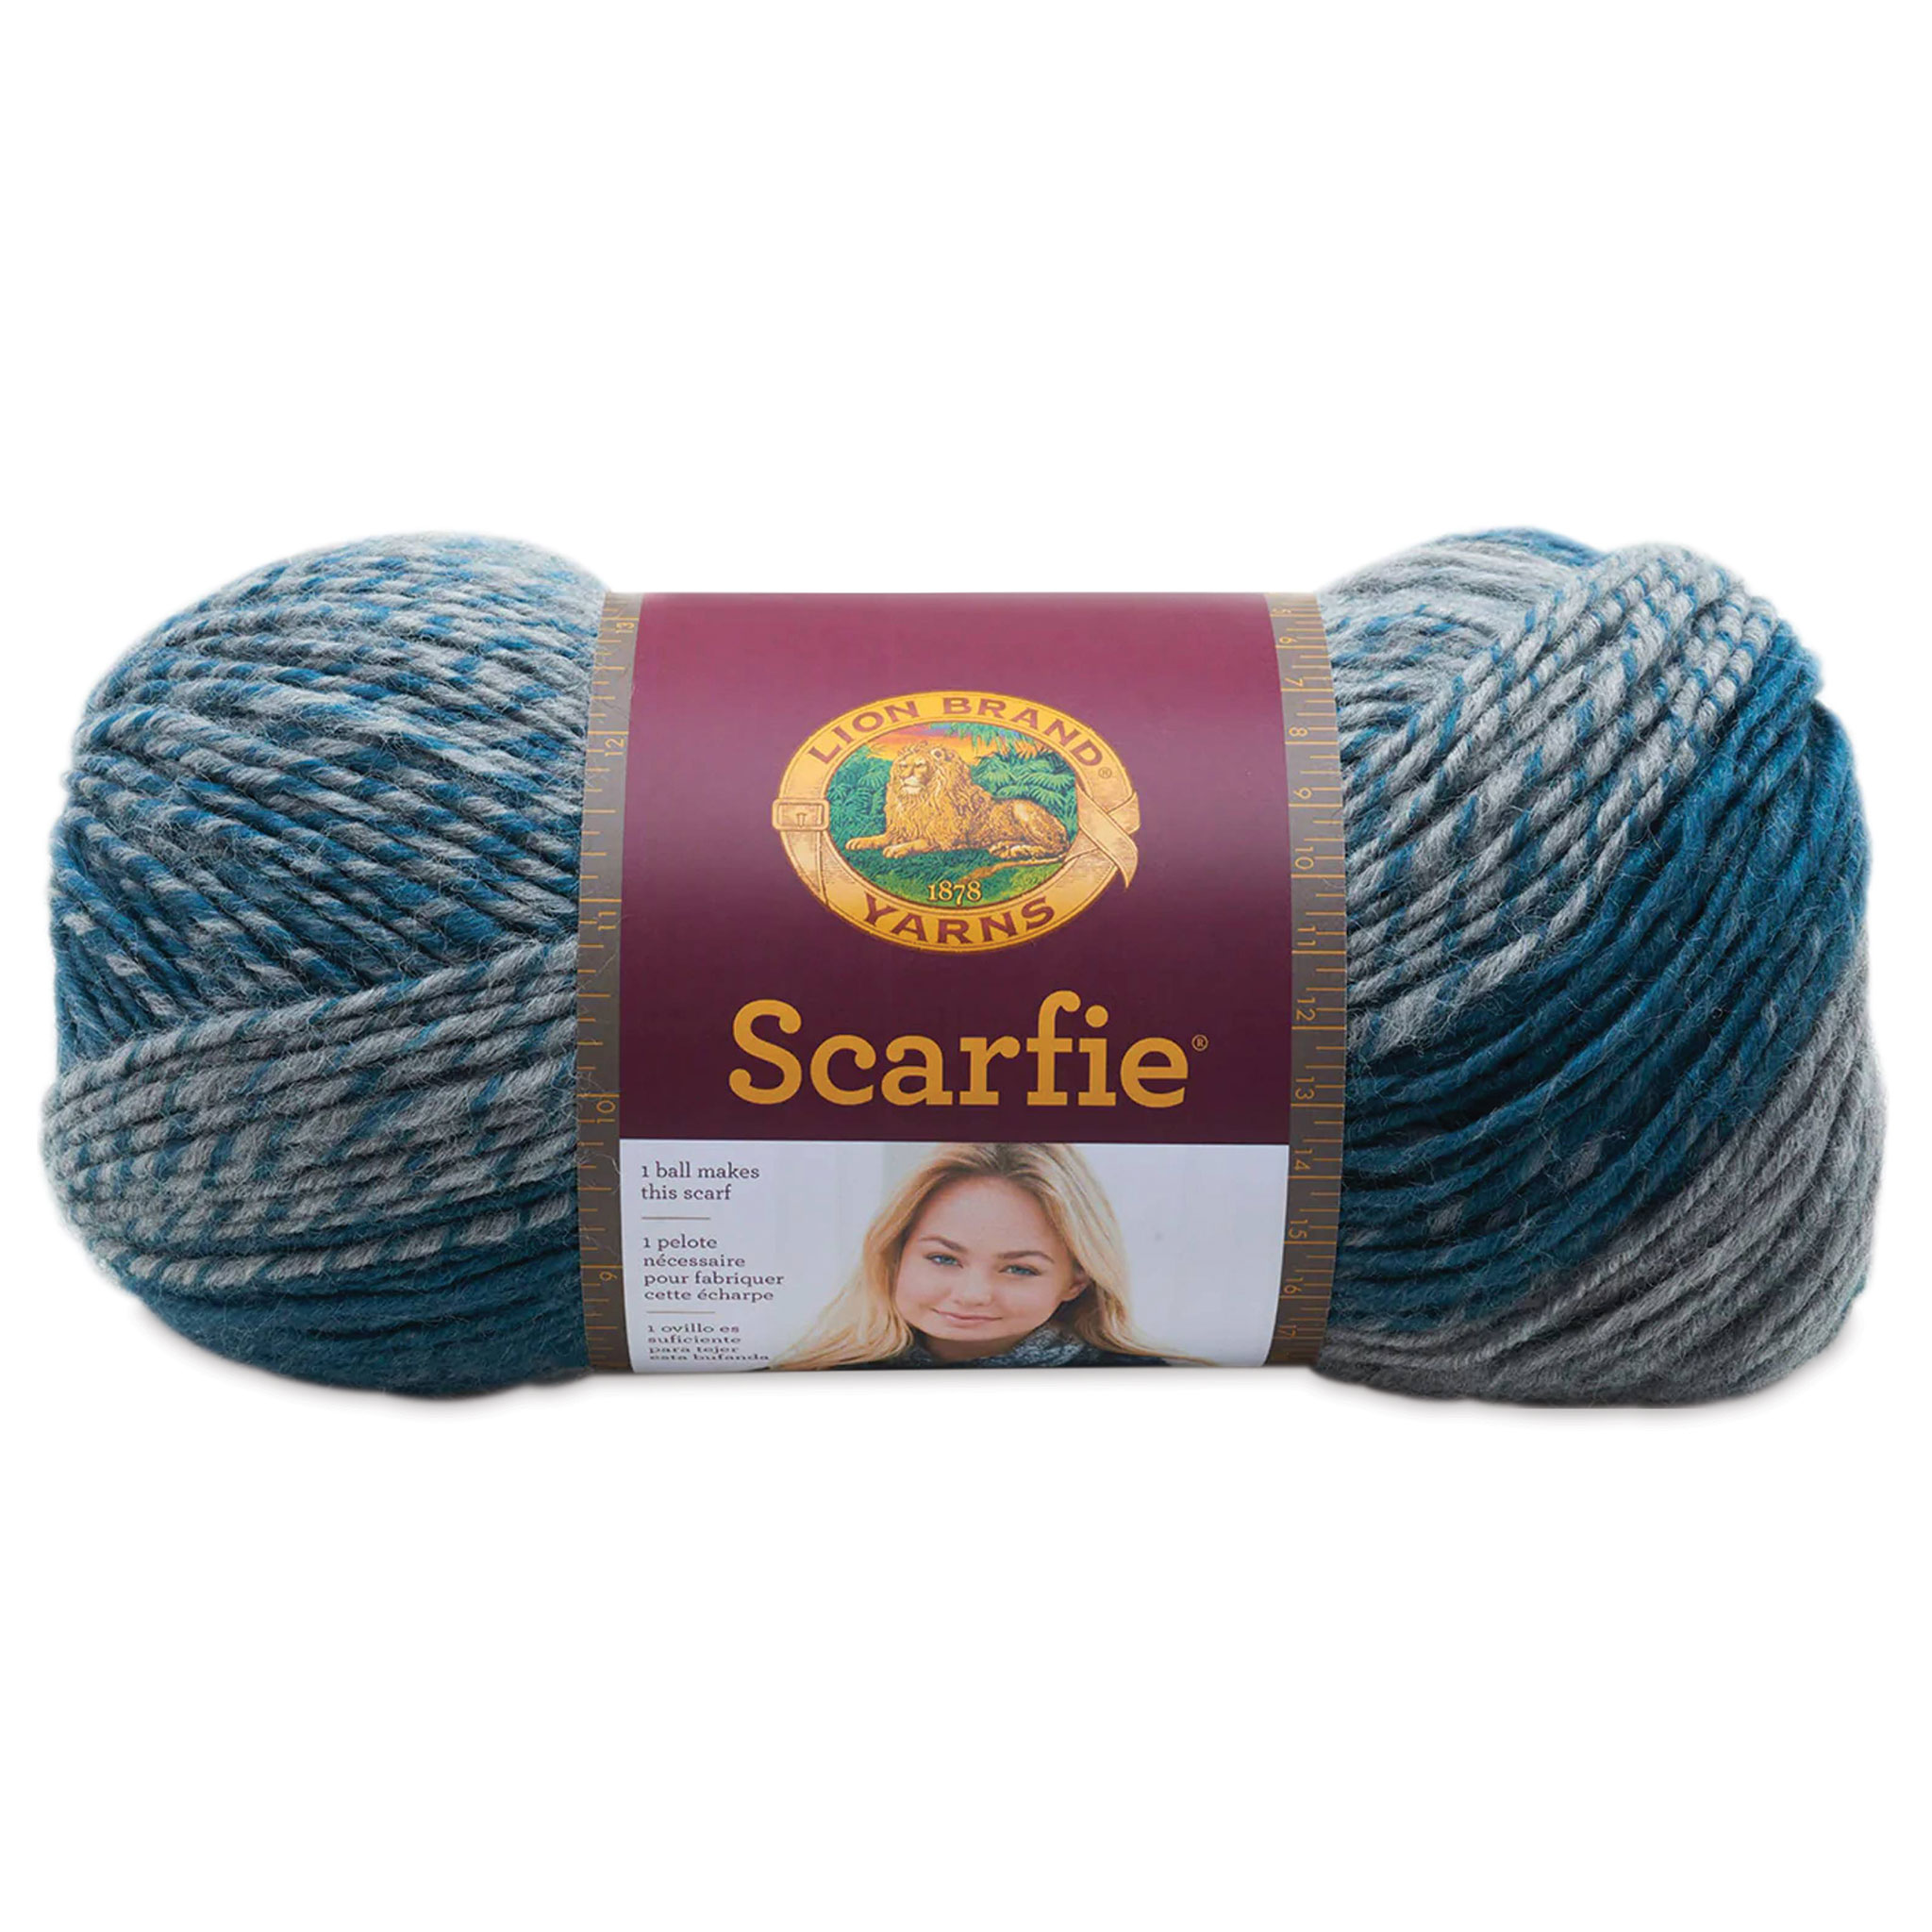 Teal & Silver - Scarfie Yarn - Lion Brand